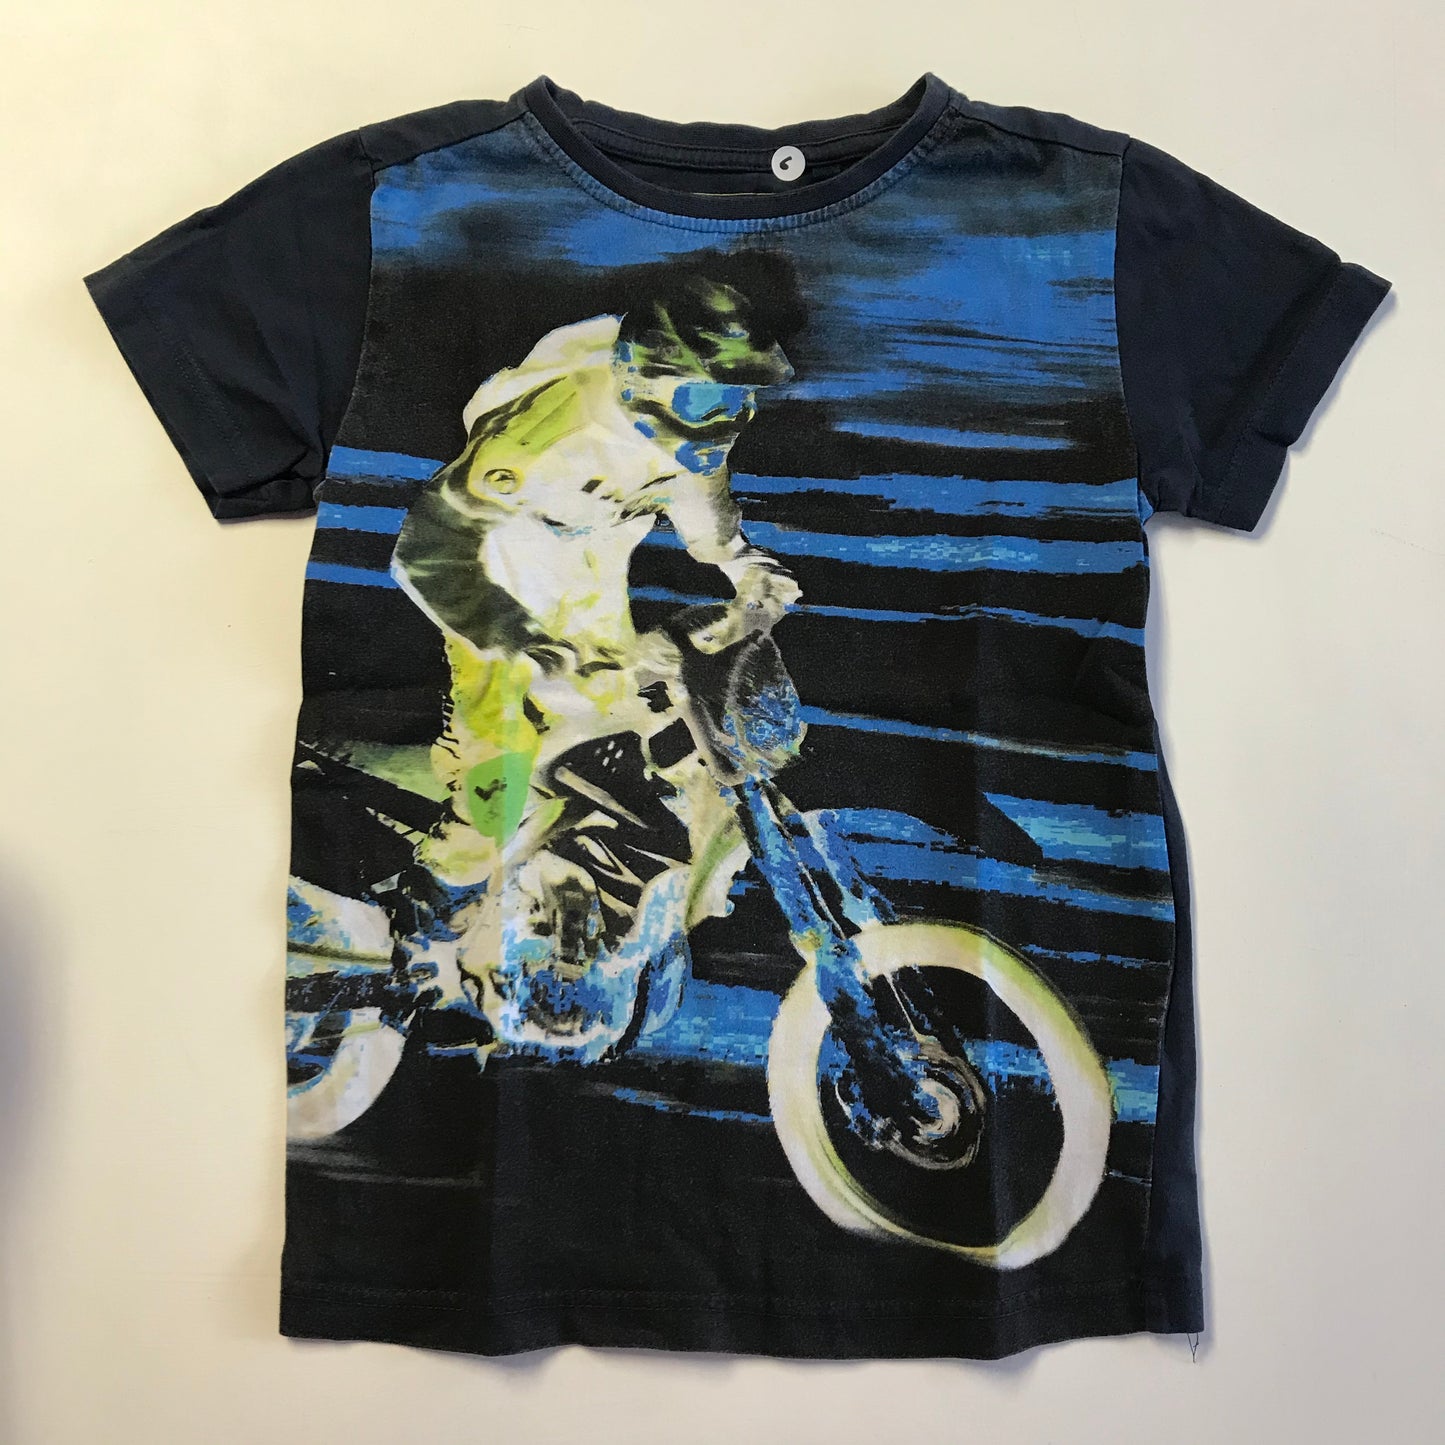 T-shirt - NEXT Motorcycle - Age 6